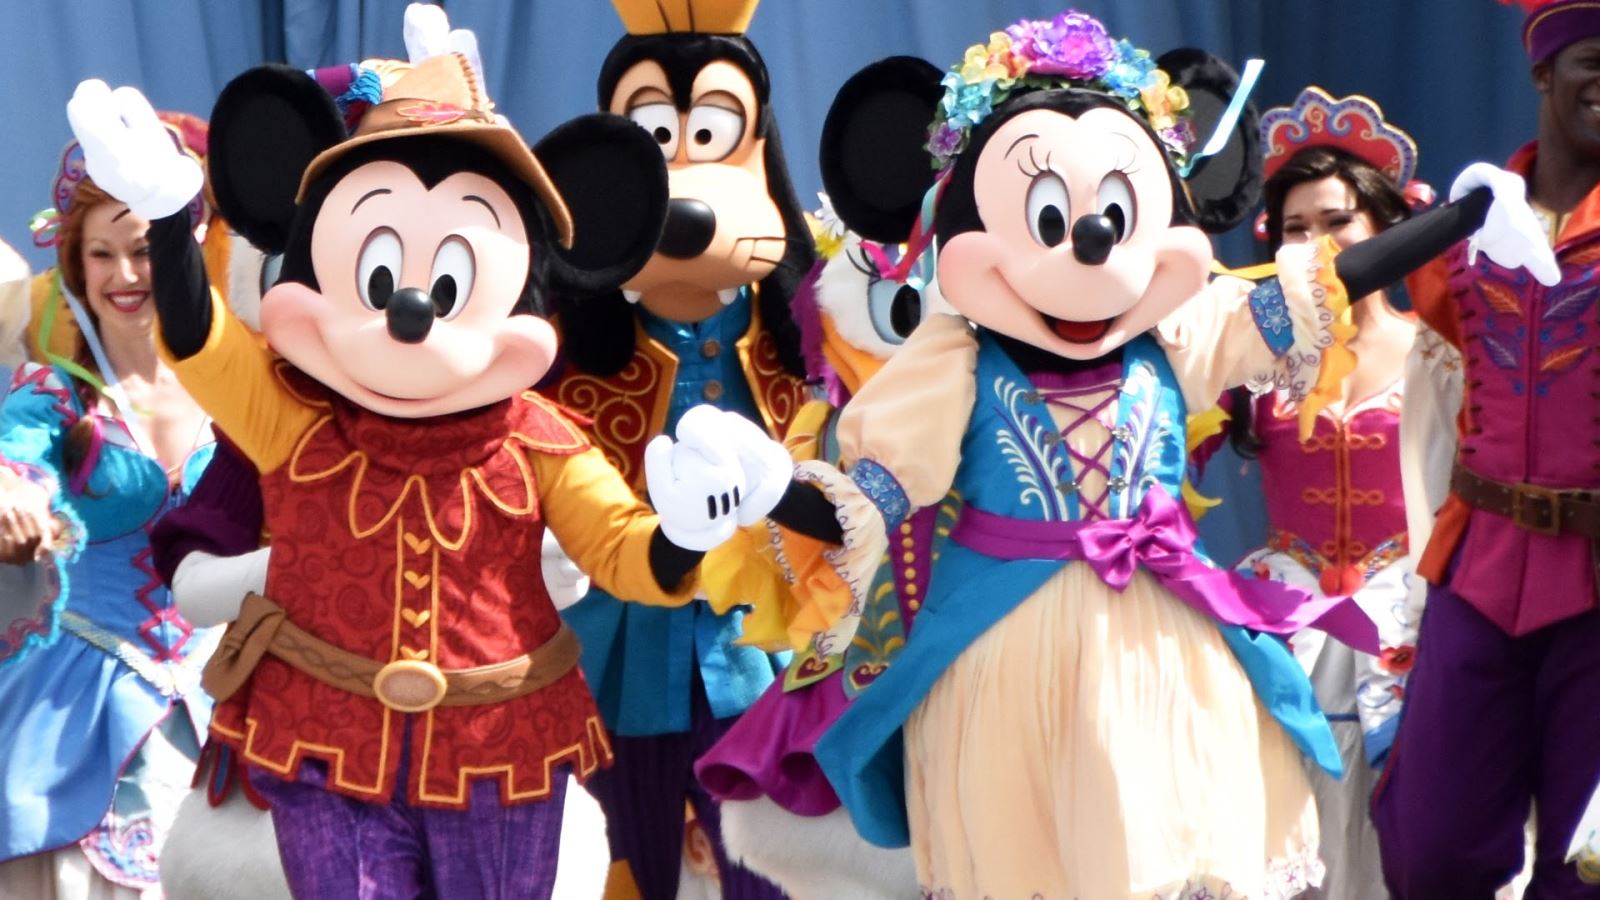 Mickey and friends at Disney's Magic Kingdom